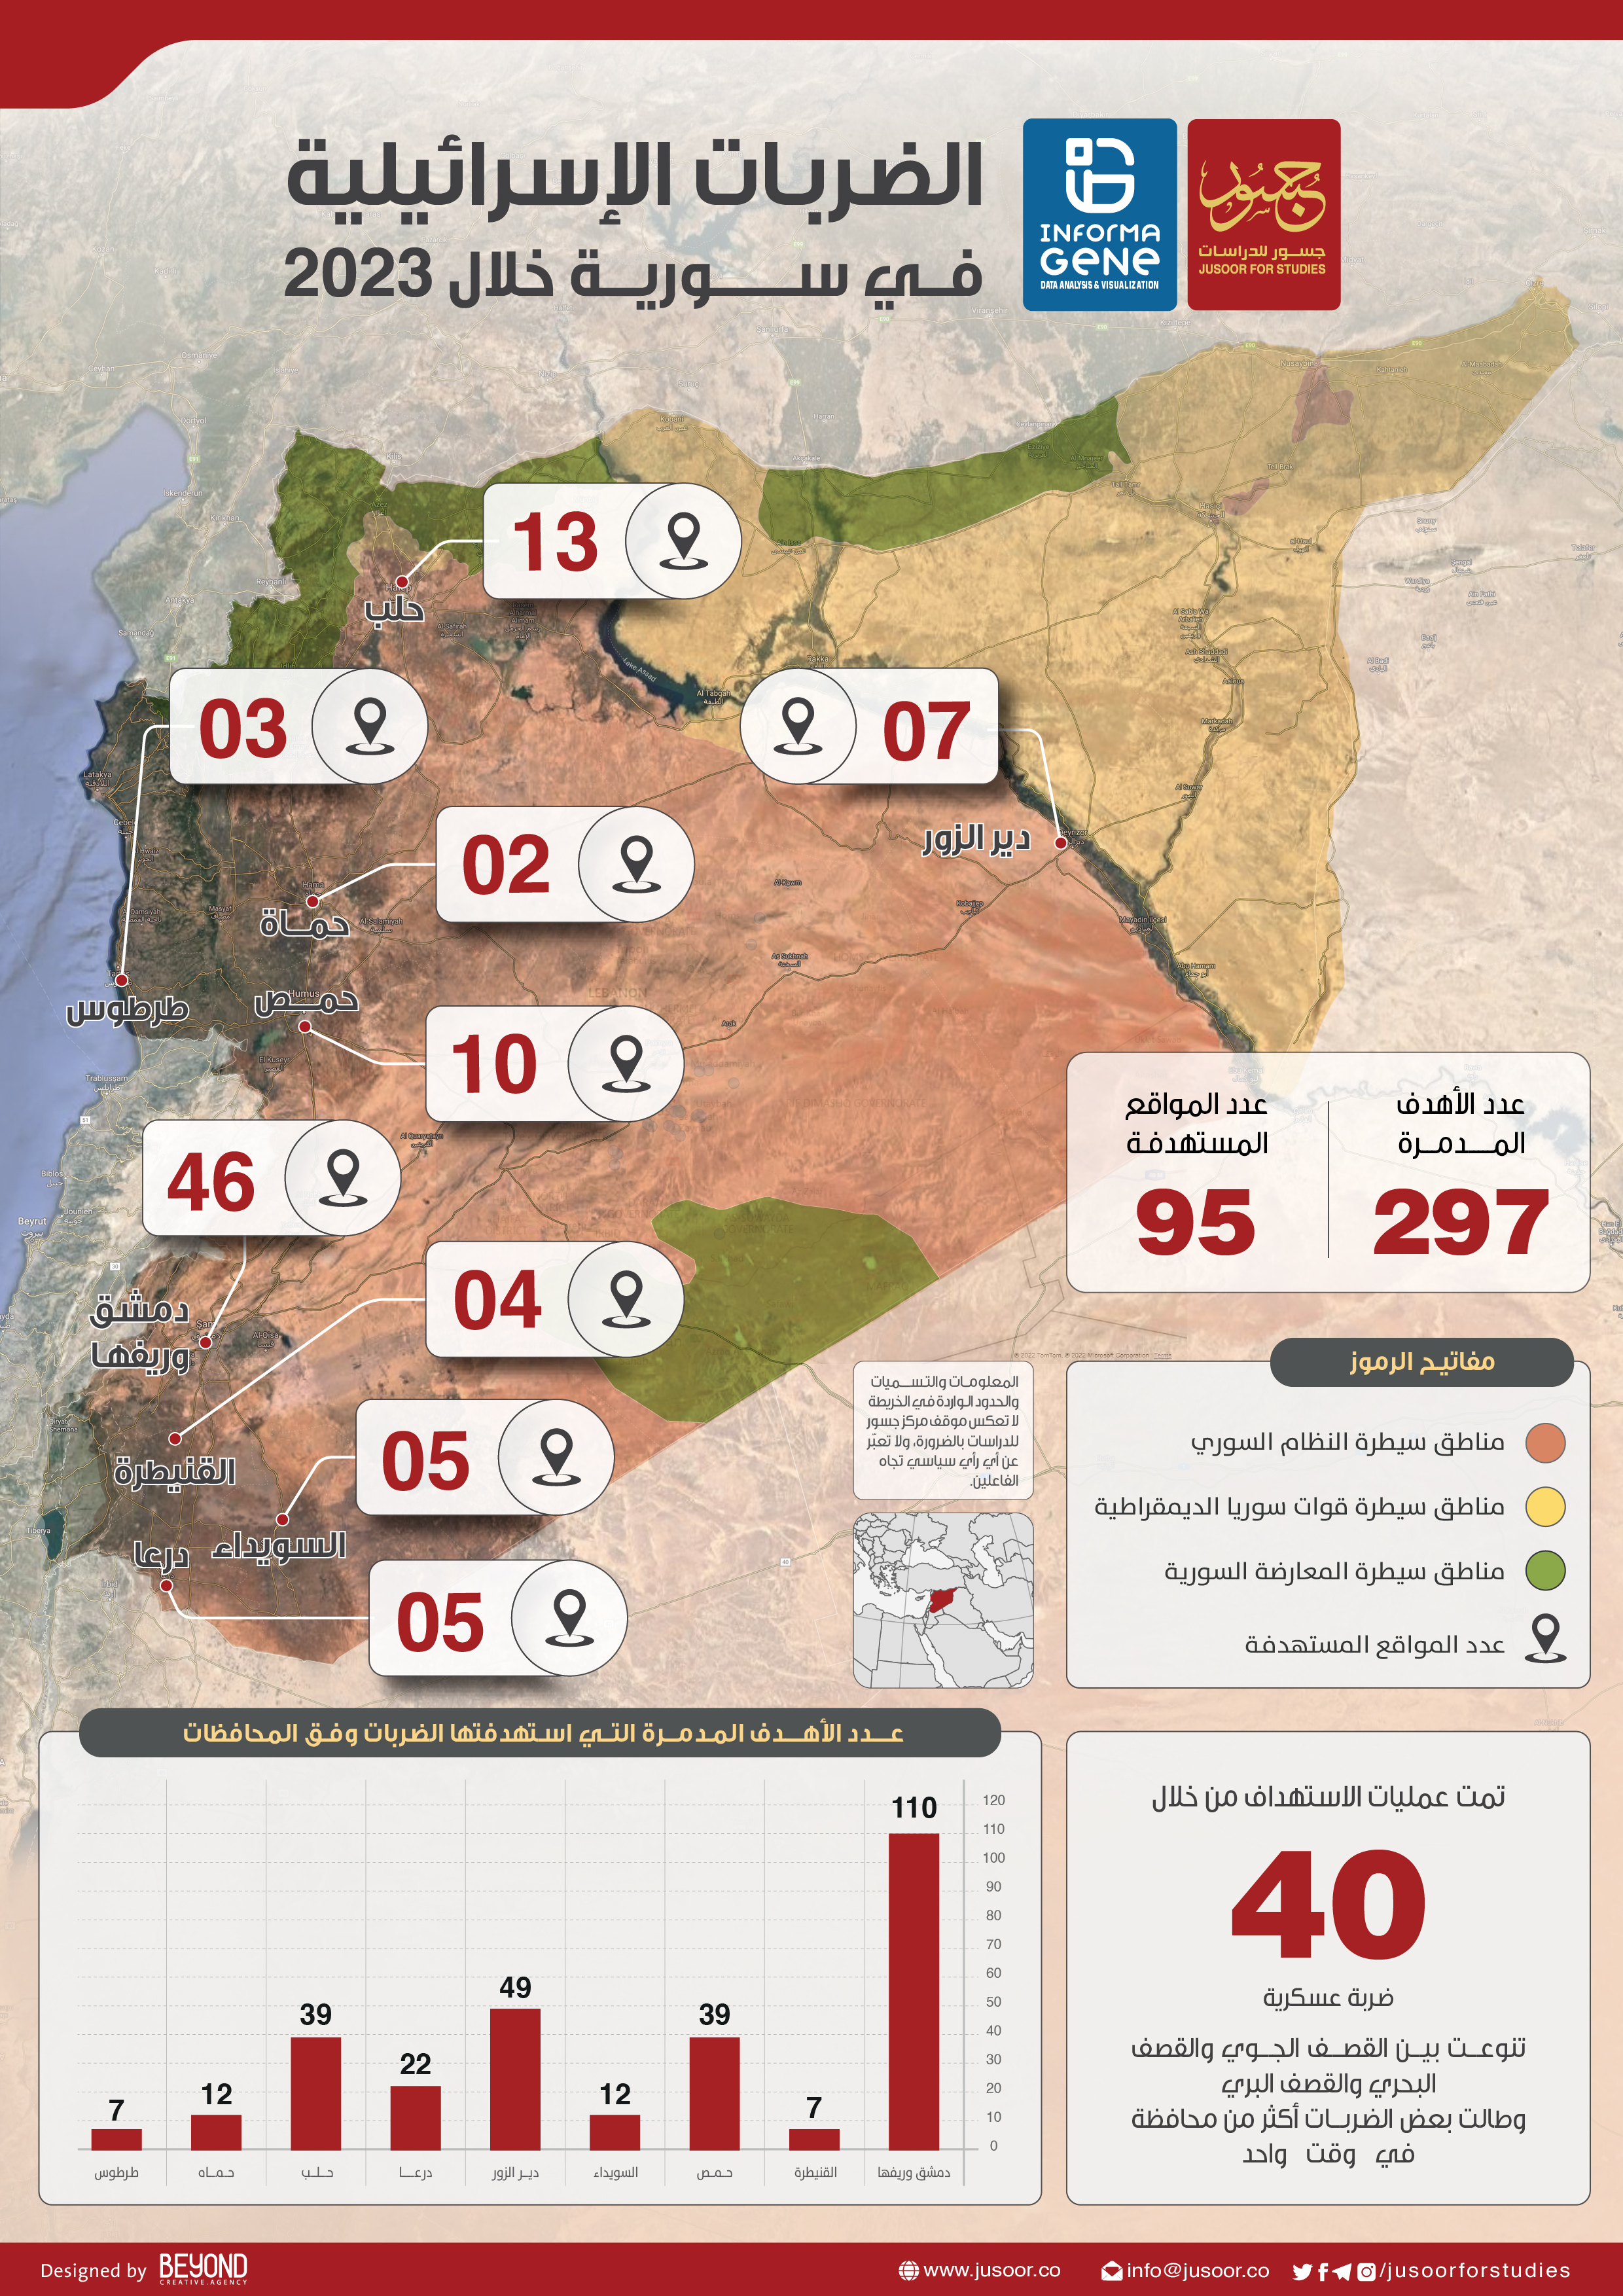 israeli strikes in syria